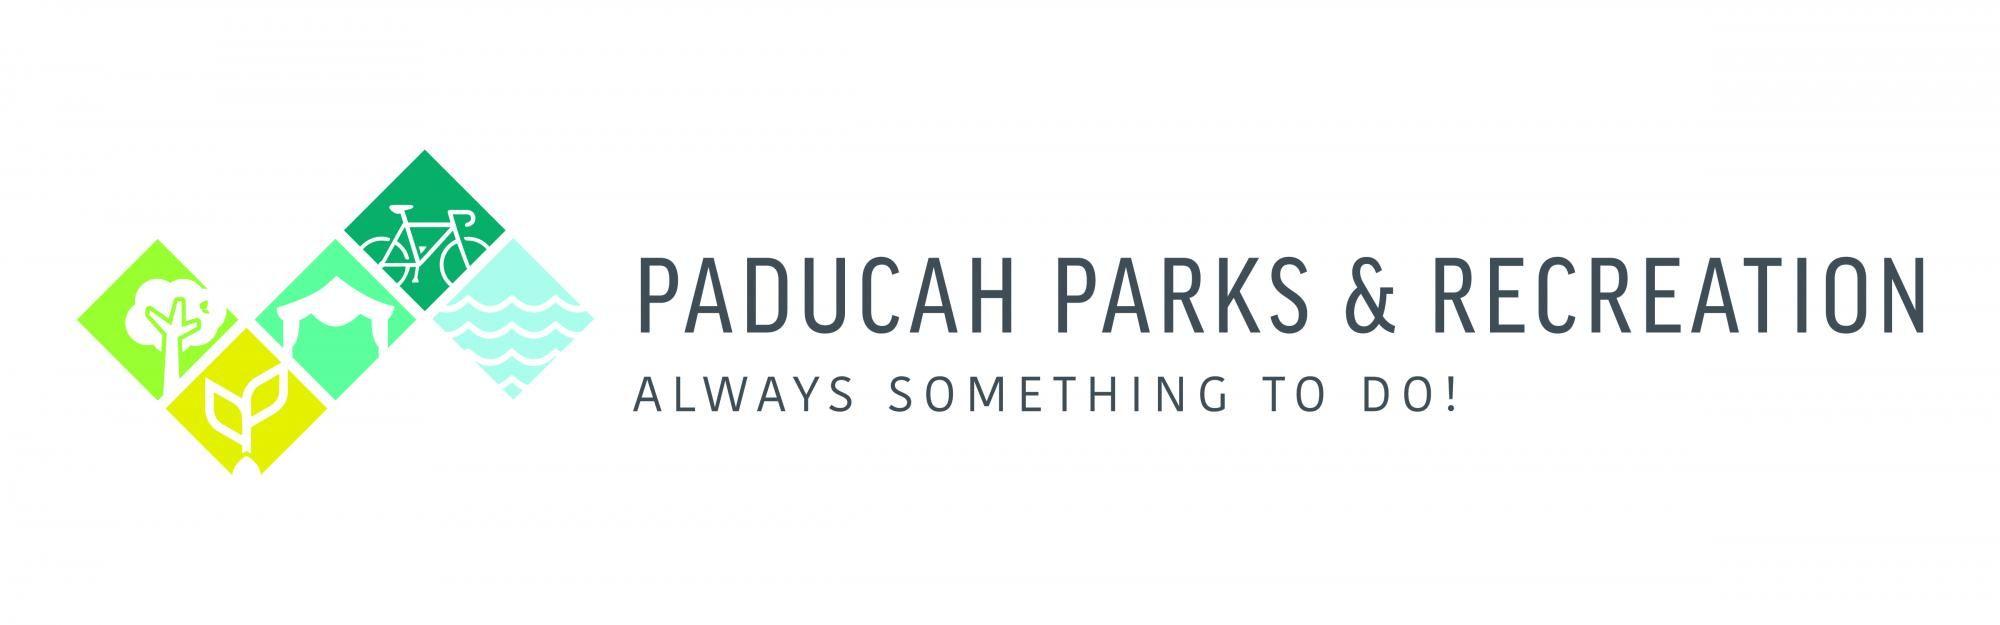 Recreation.gov Logo - Parks & Recreation Department. City of Paducah